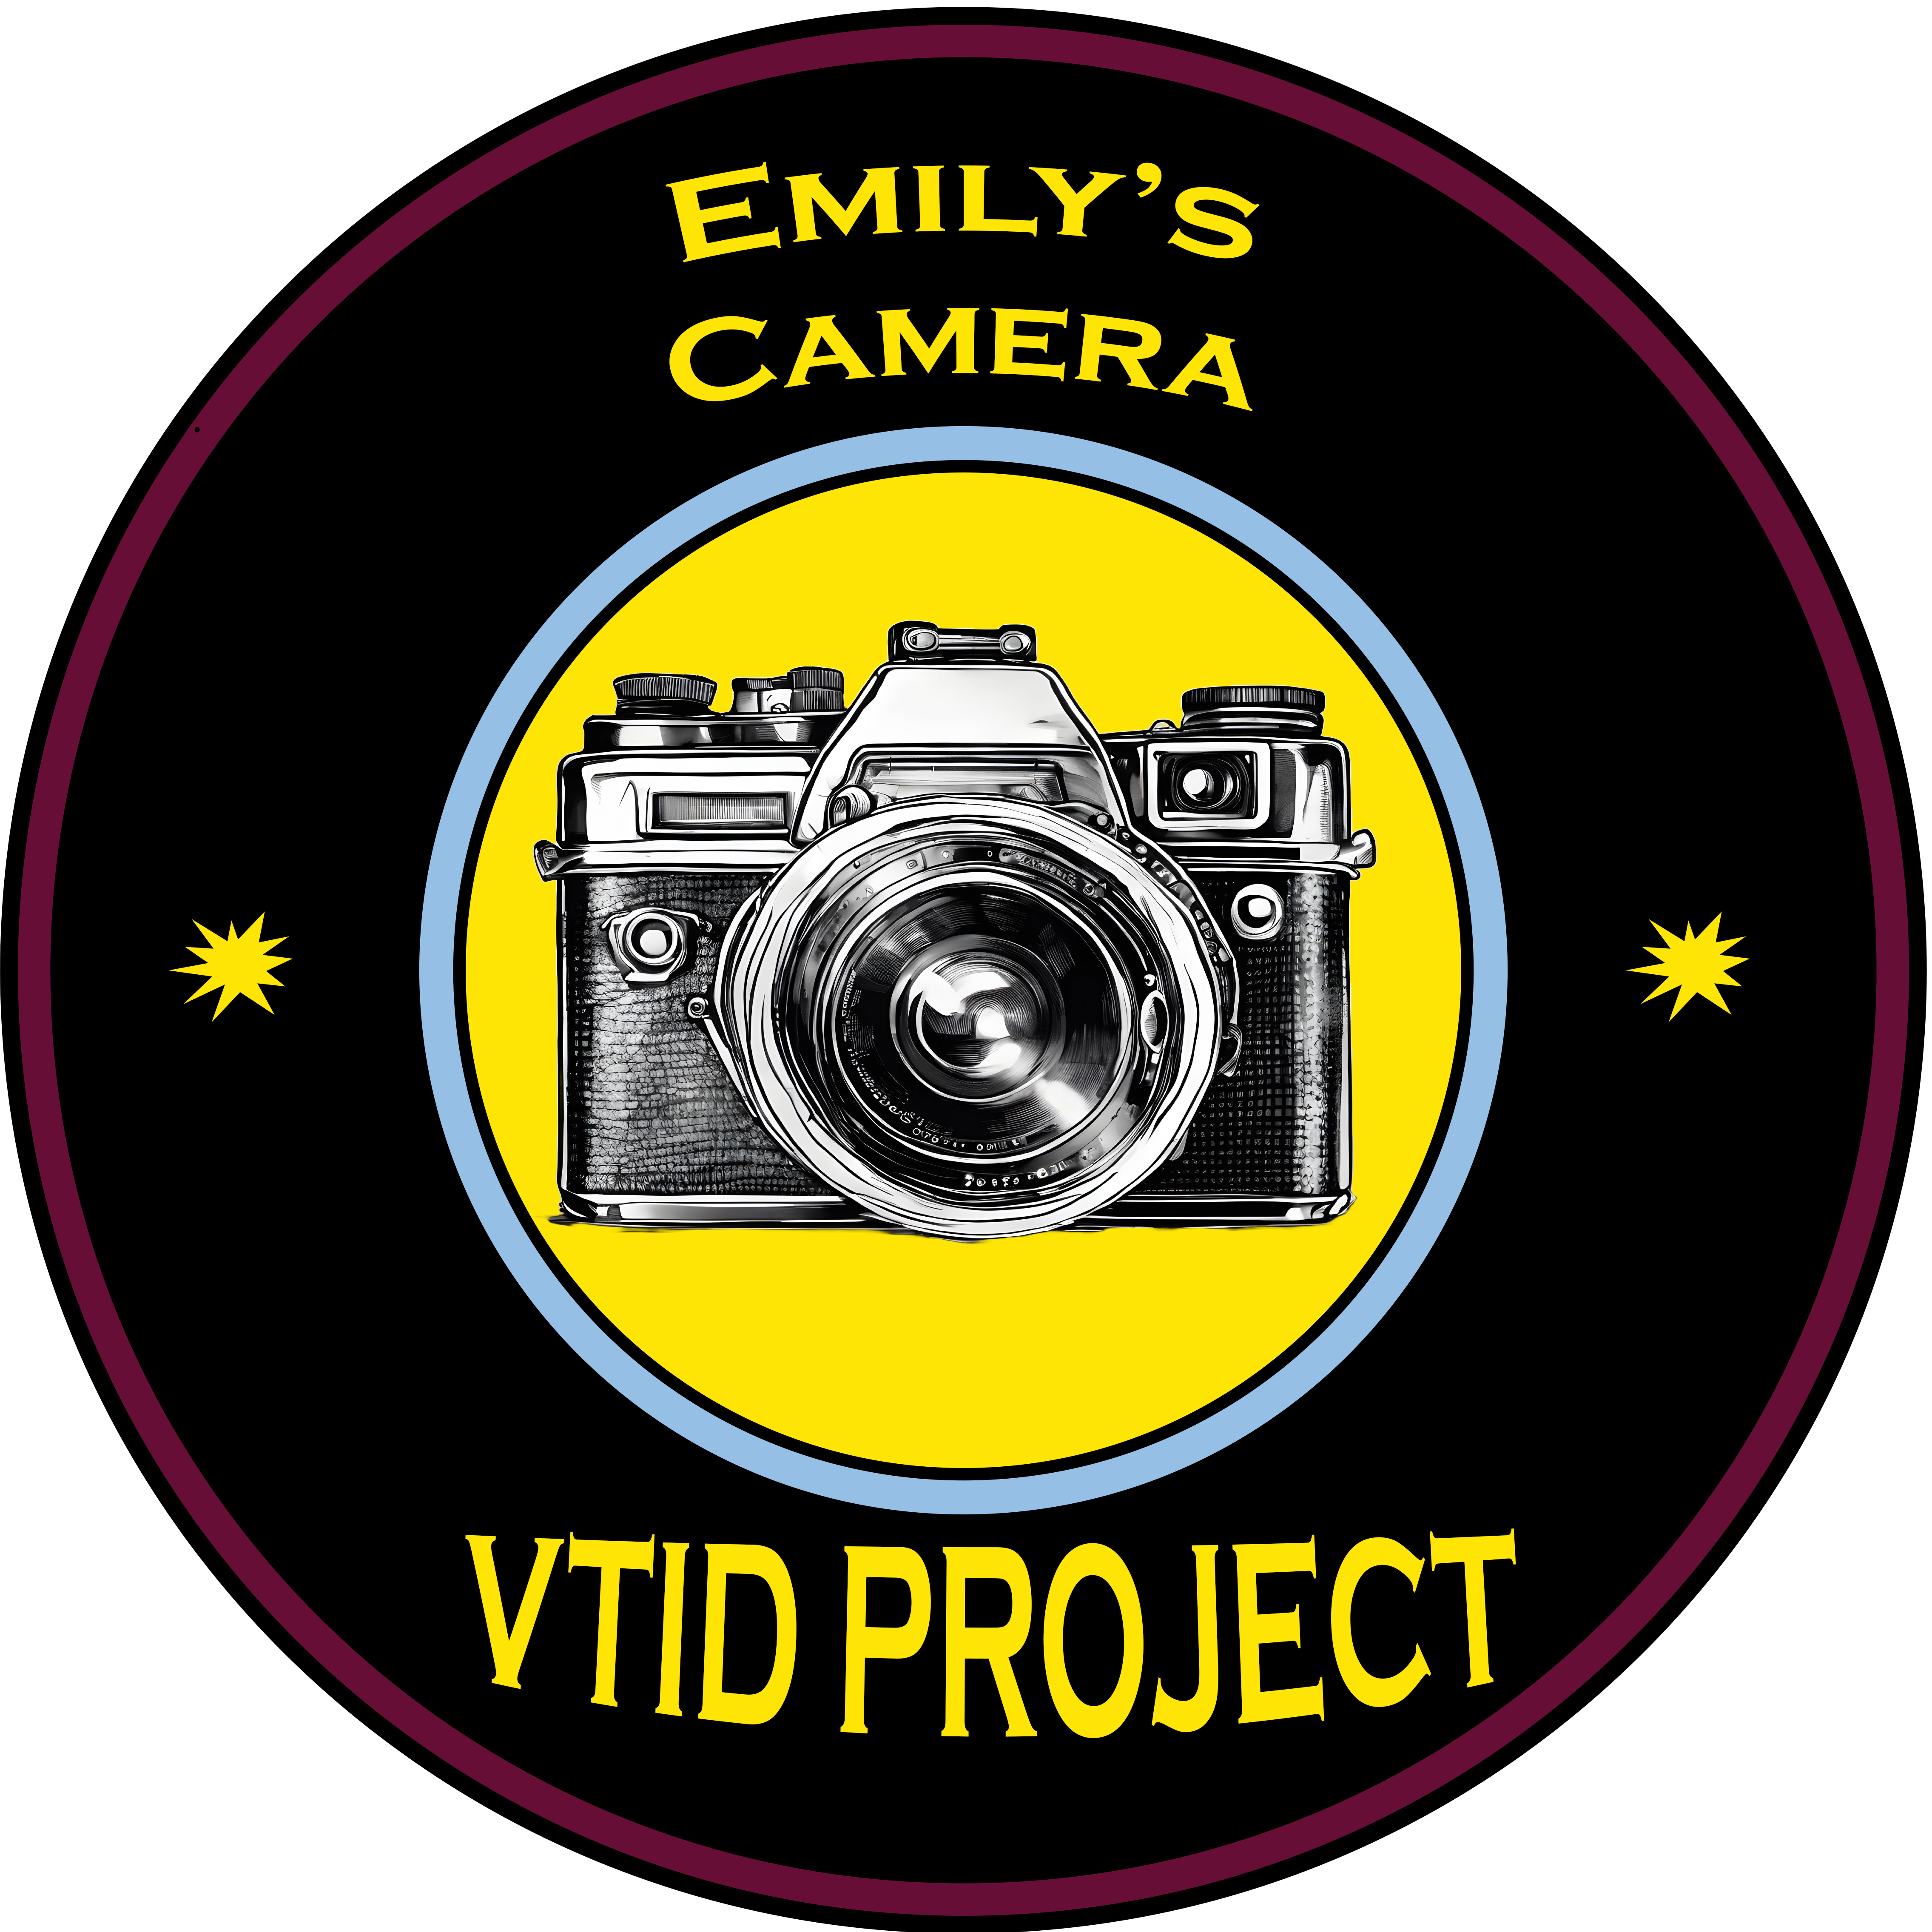 VTID Project